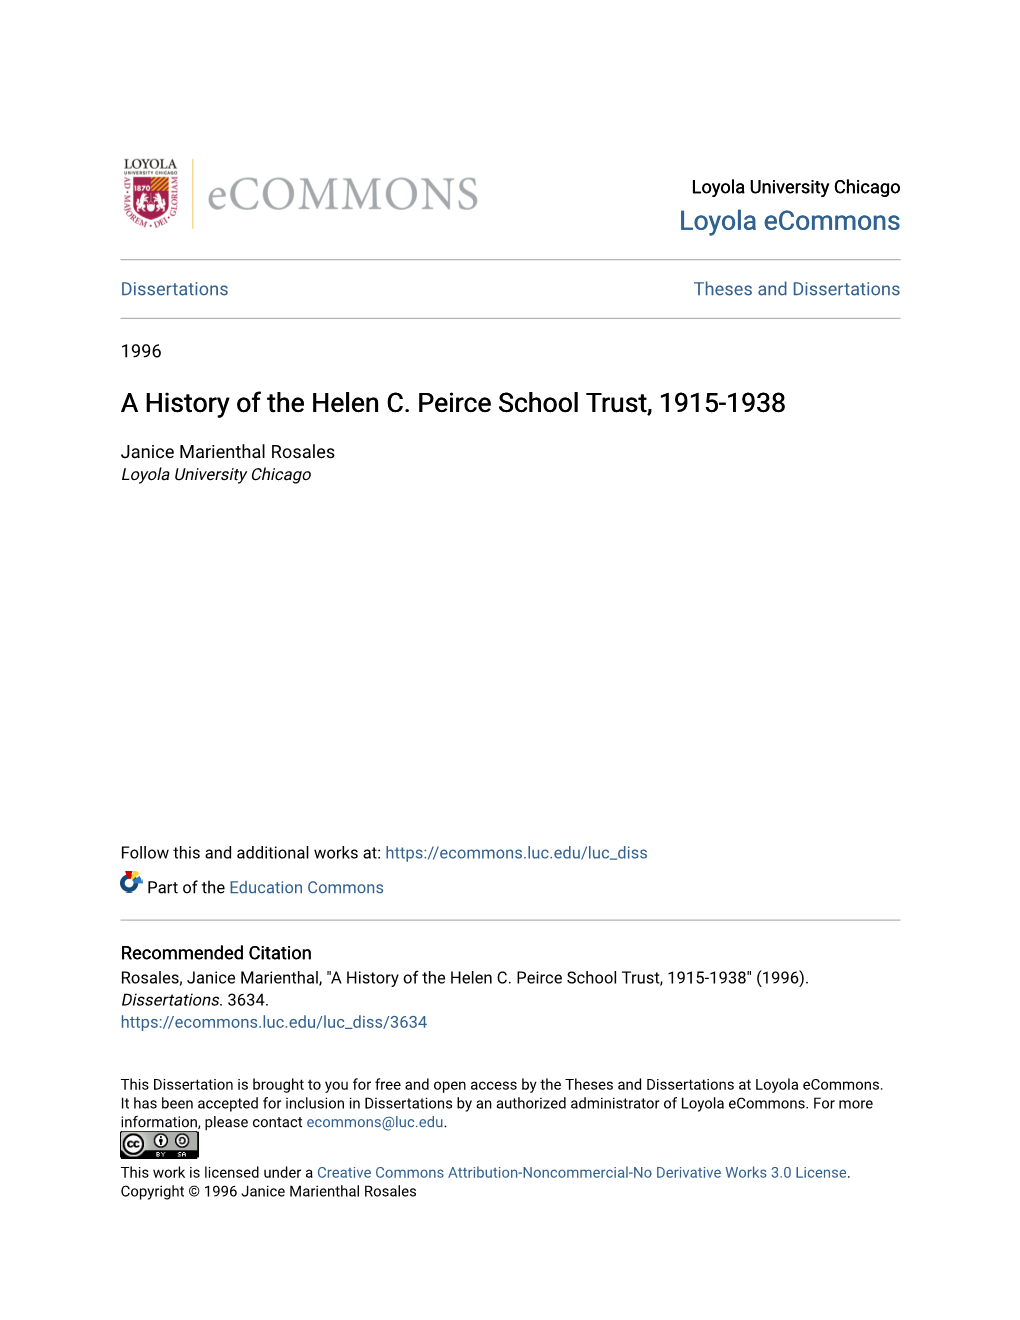 A History of the Helen C. Peirce School Trust, 1915-1938